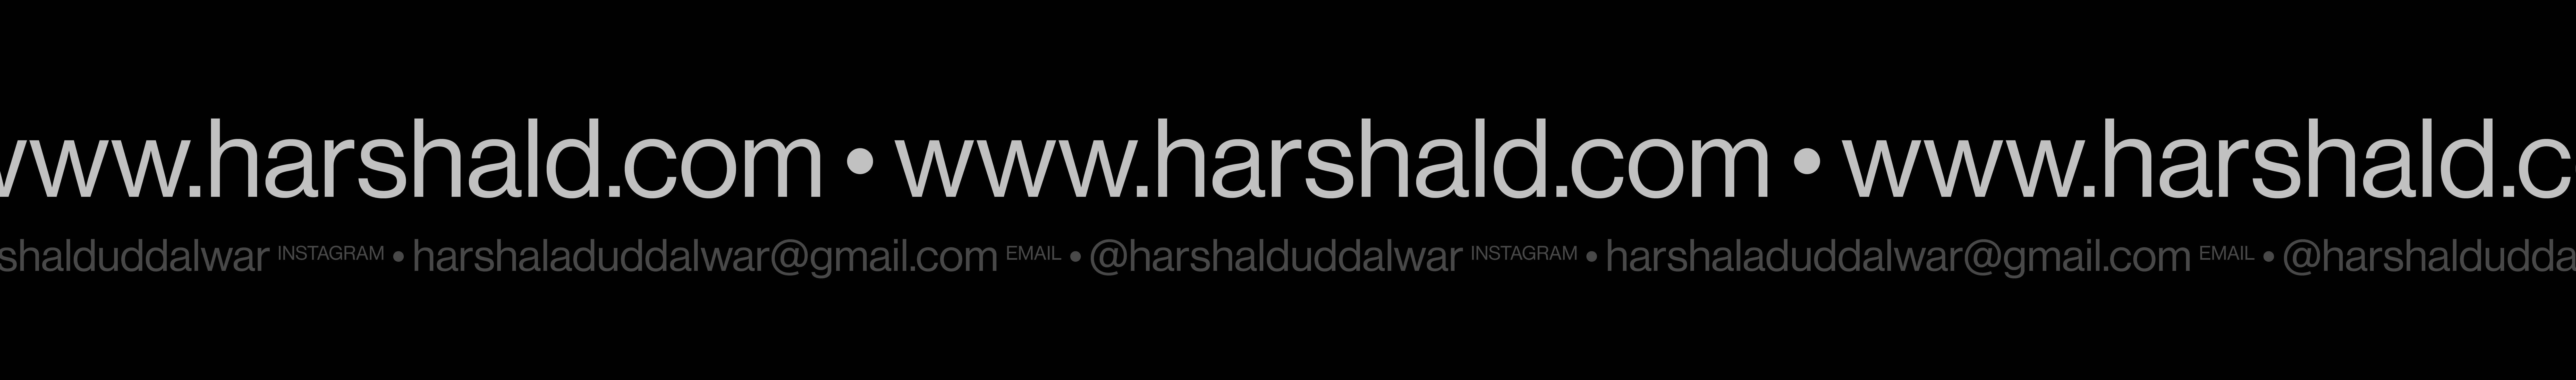 Harshal Duddalwar's profile banner